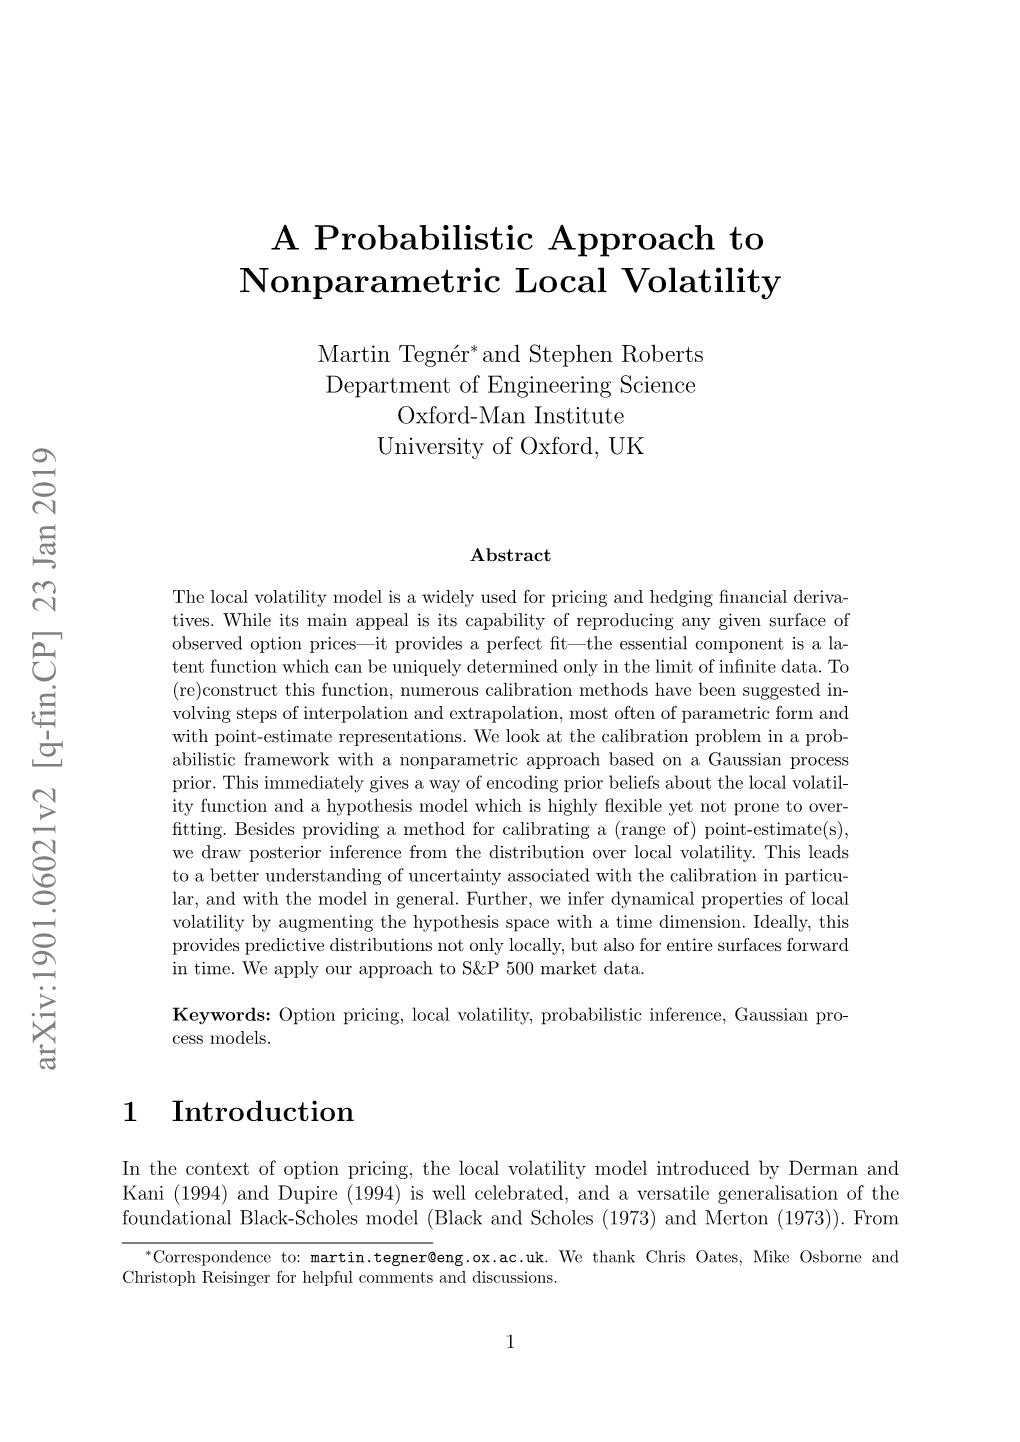 A Probabilistic Approach to Nonparametric Local Volatility Arxiv